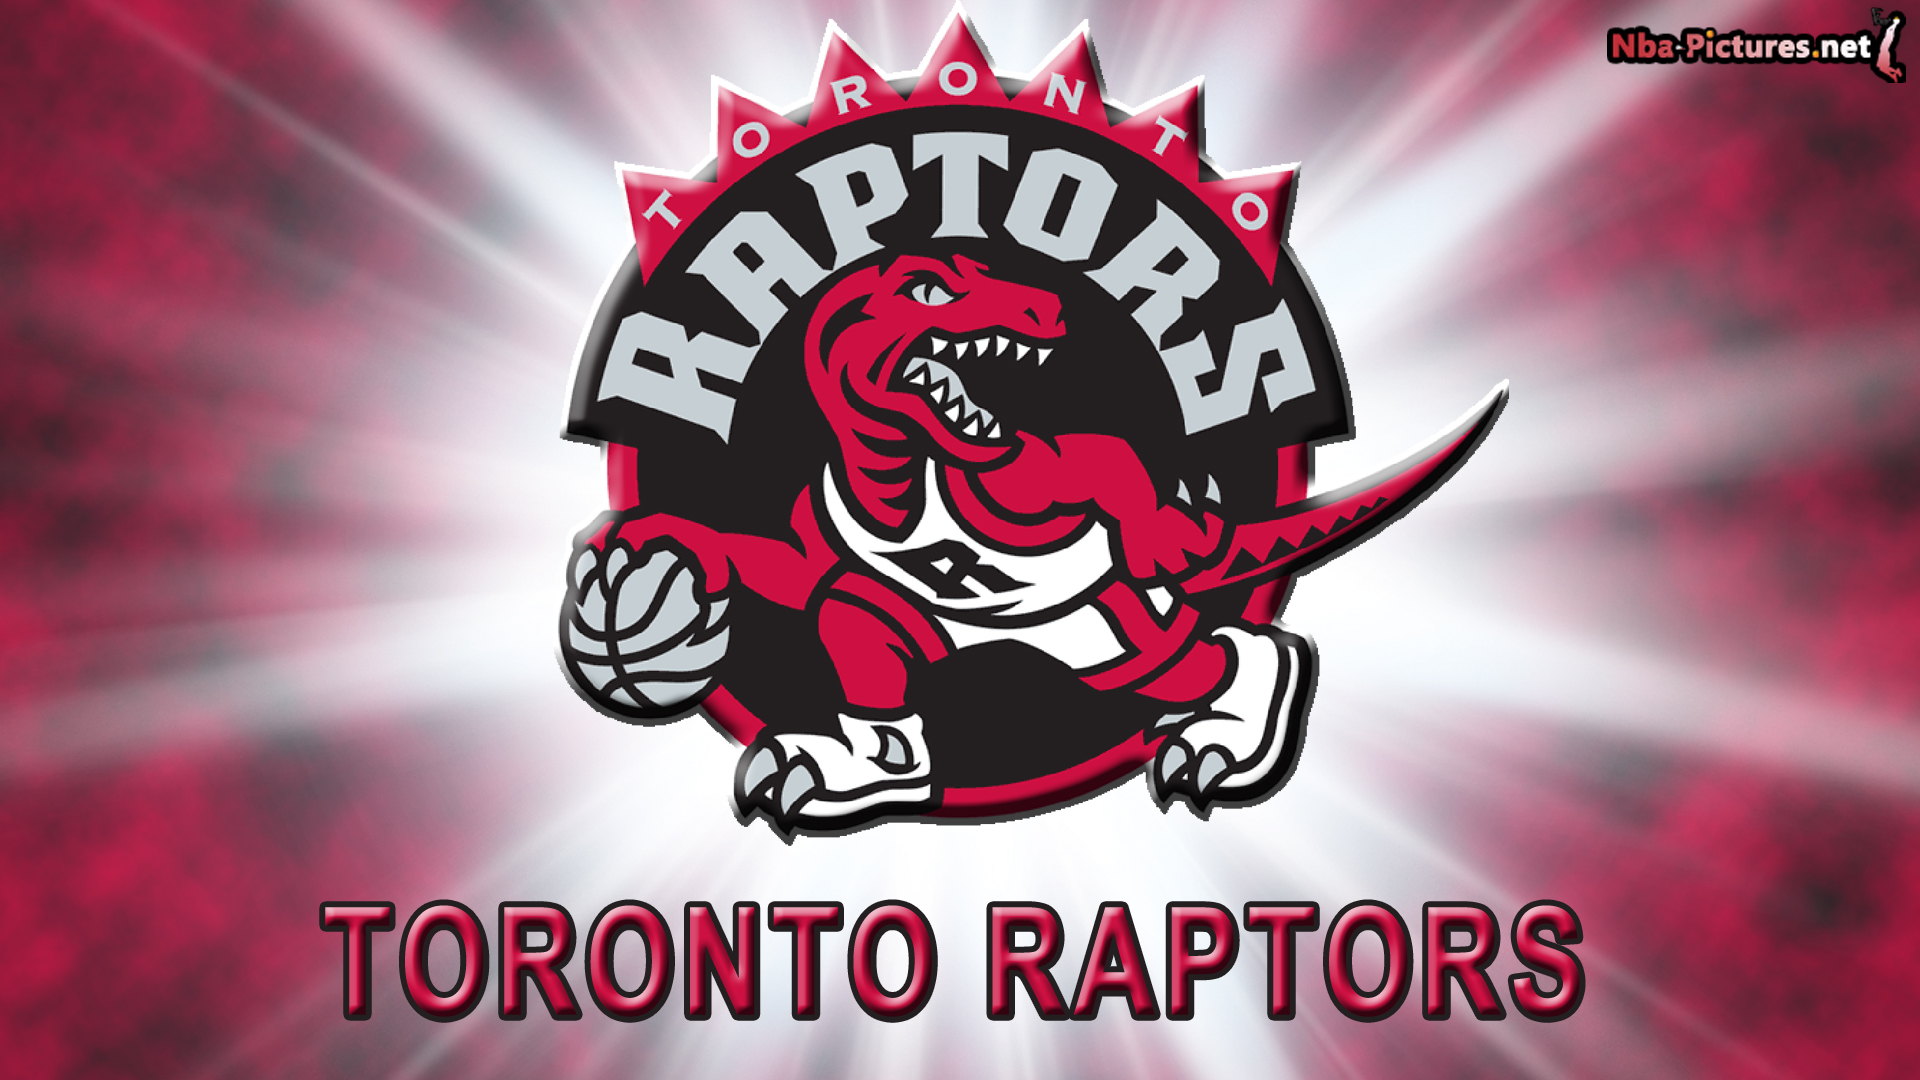 Toronto Raptors rumors